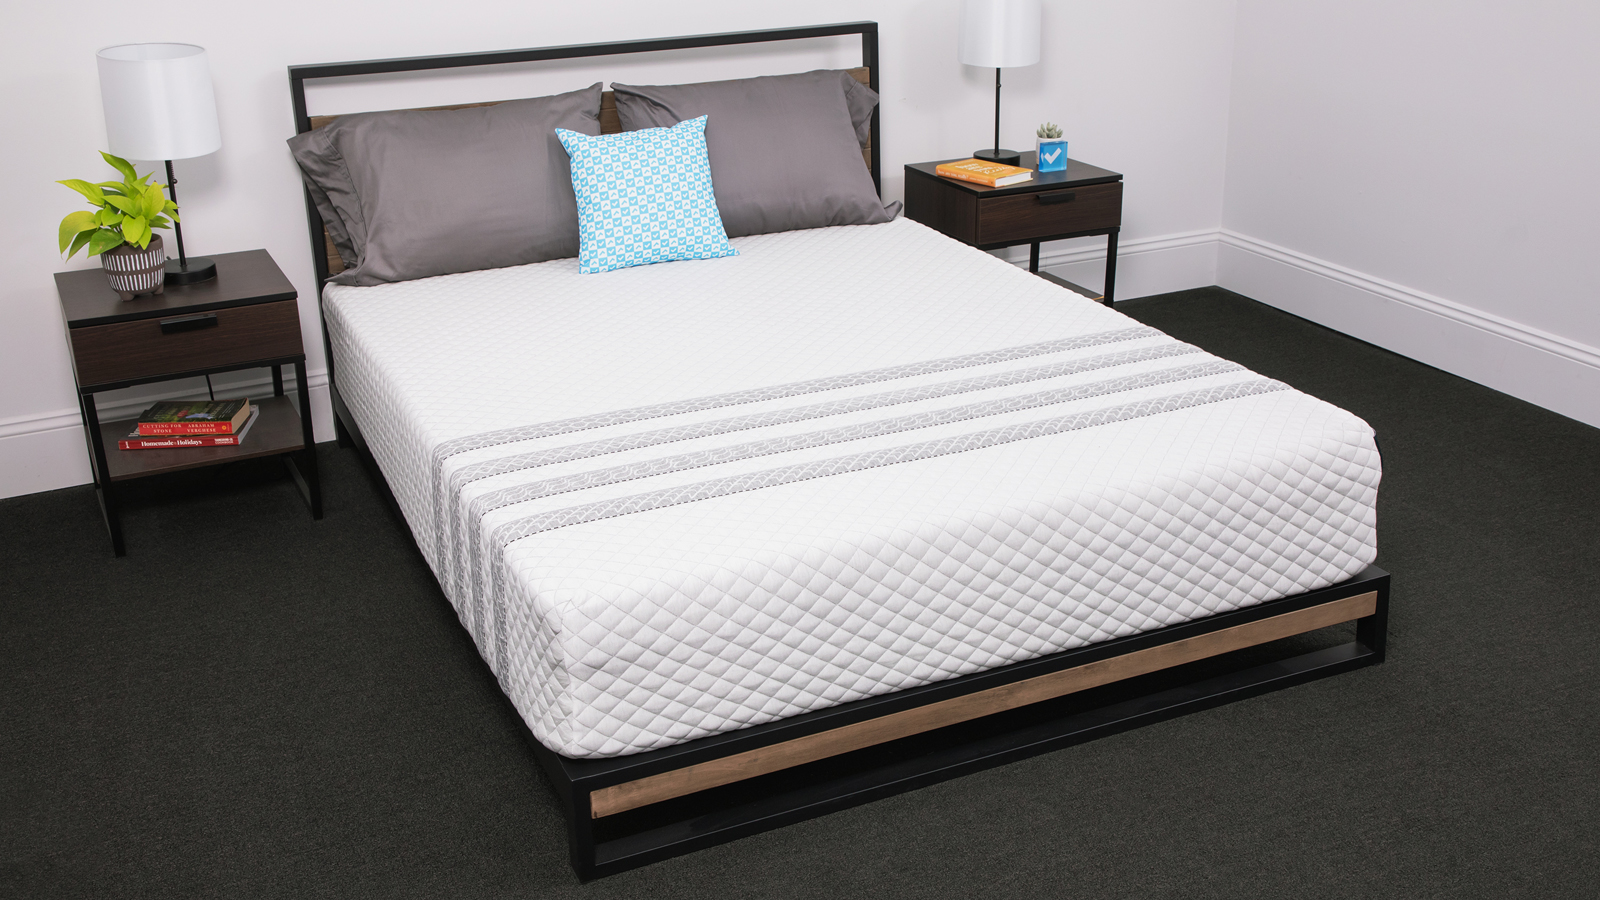 Leesa sapira hybrid mattress review: A Comprehensive Review插图4